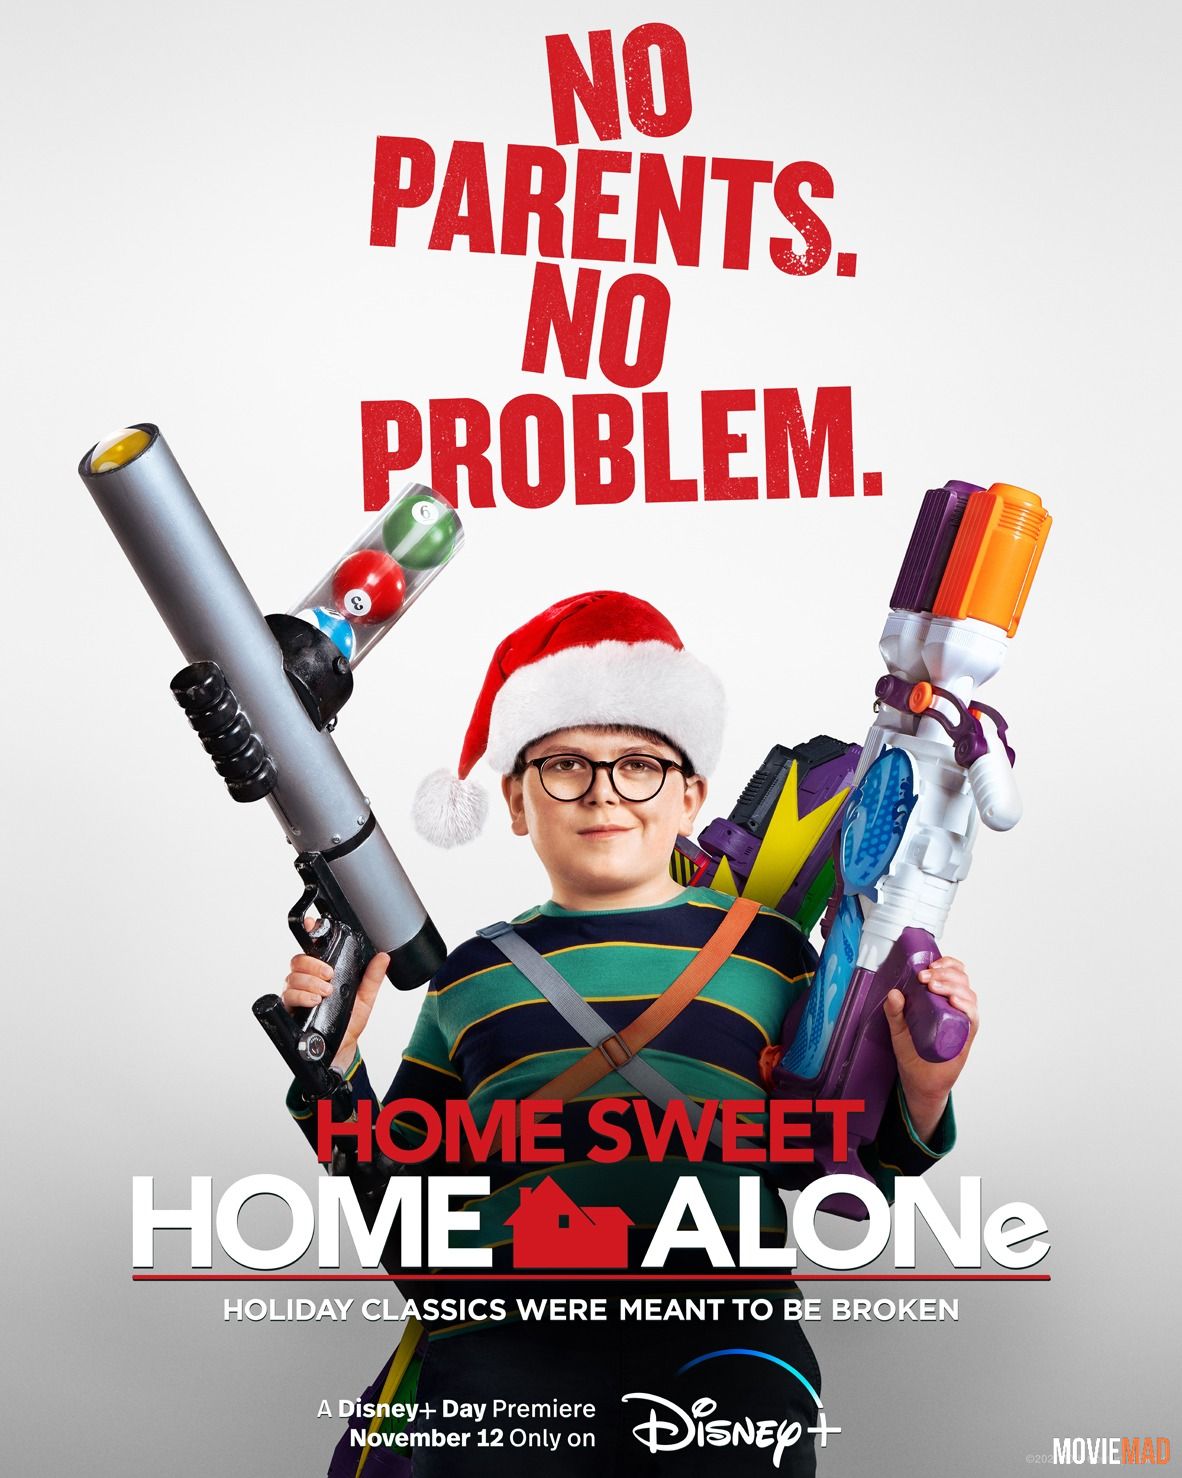 Home Sweet Home Alone 2021 WEB-DL Dual Audio Hindi ORG 720p 480p